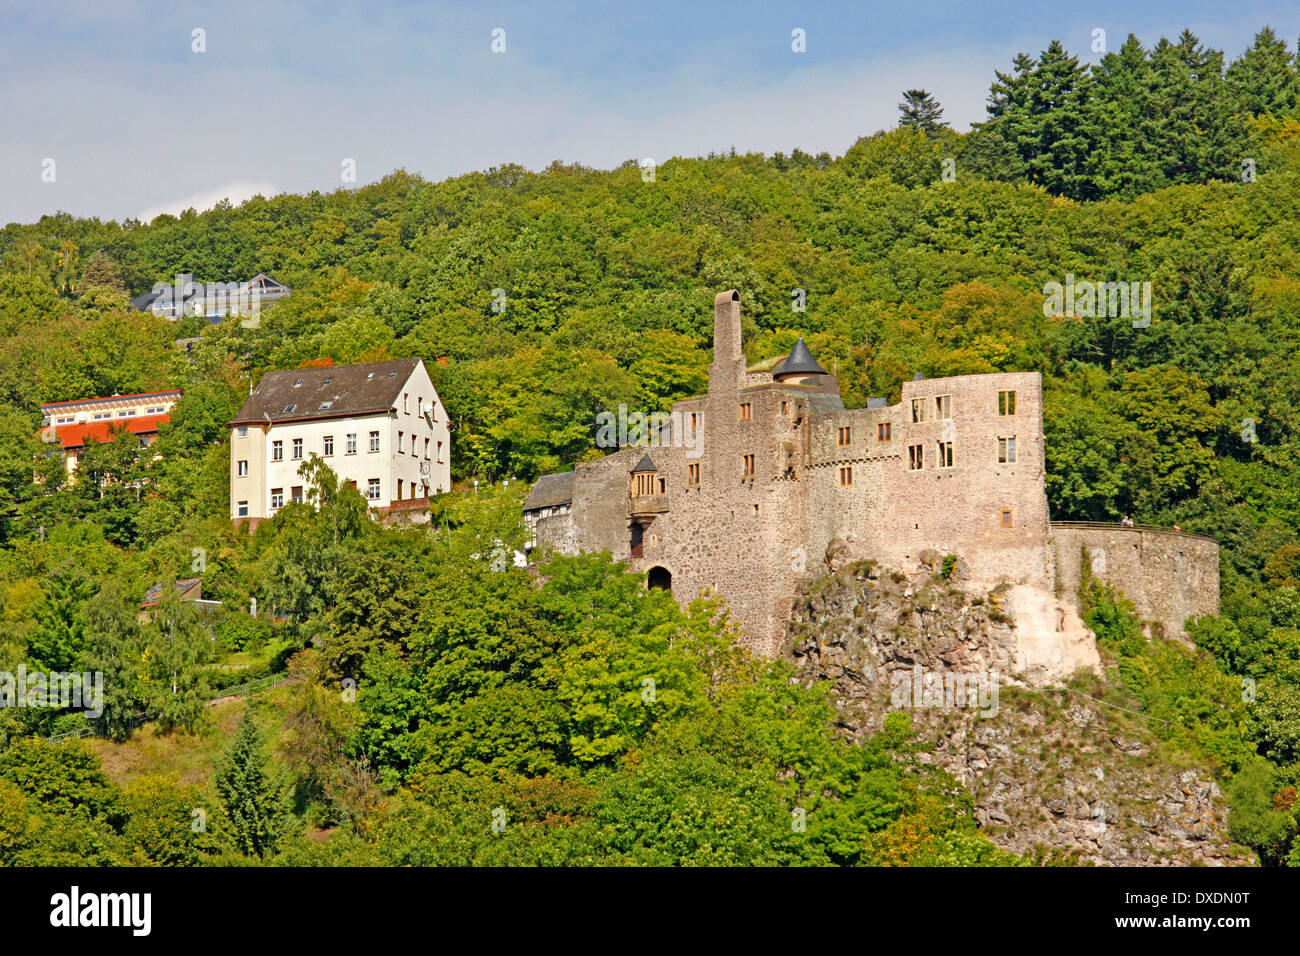 https://c8.alamy.com/comp/DXDN0T/castle-oberstein-idar-oberstein-DXDN0T.jpg